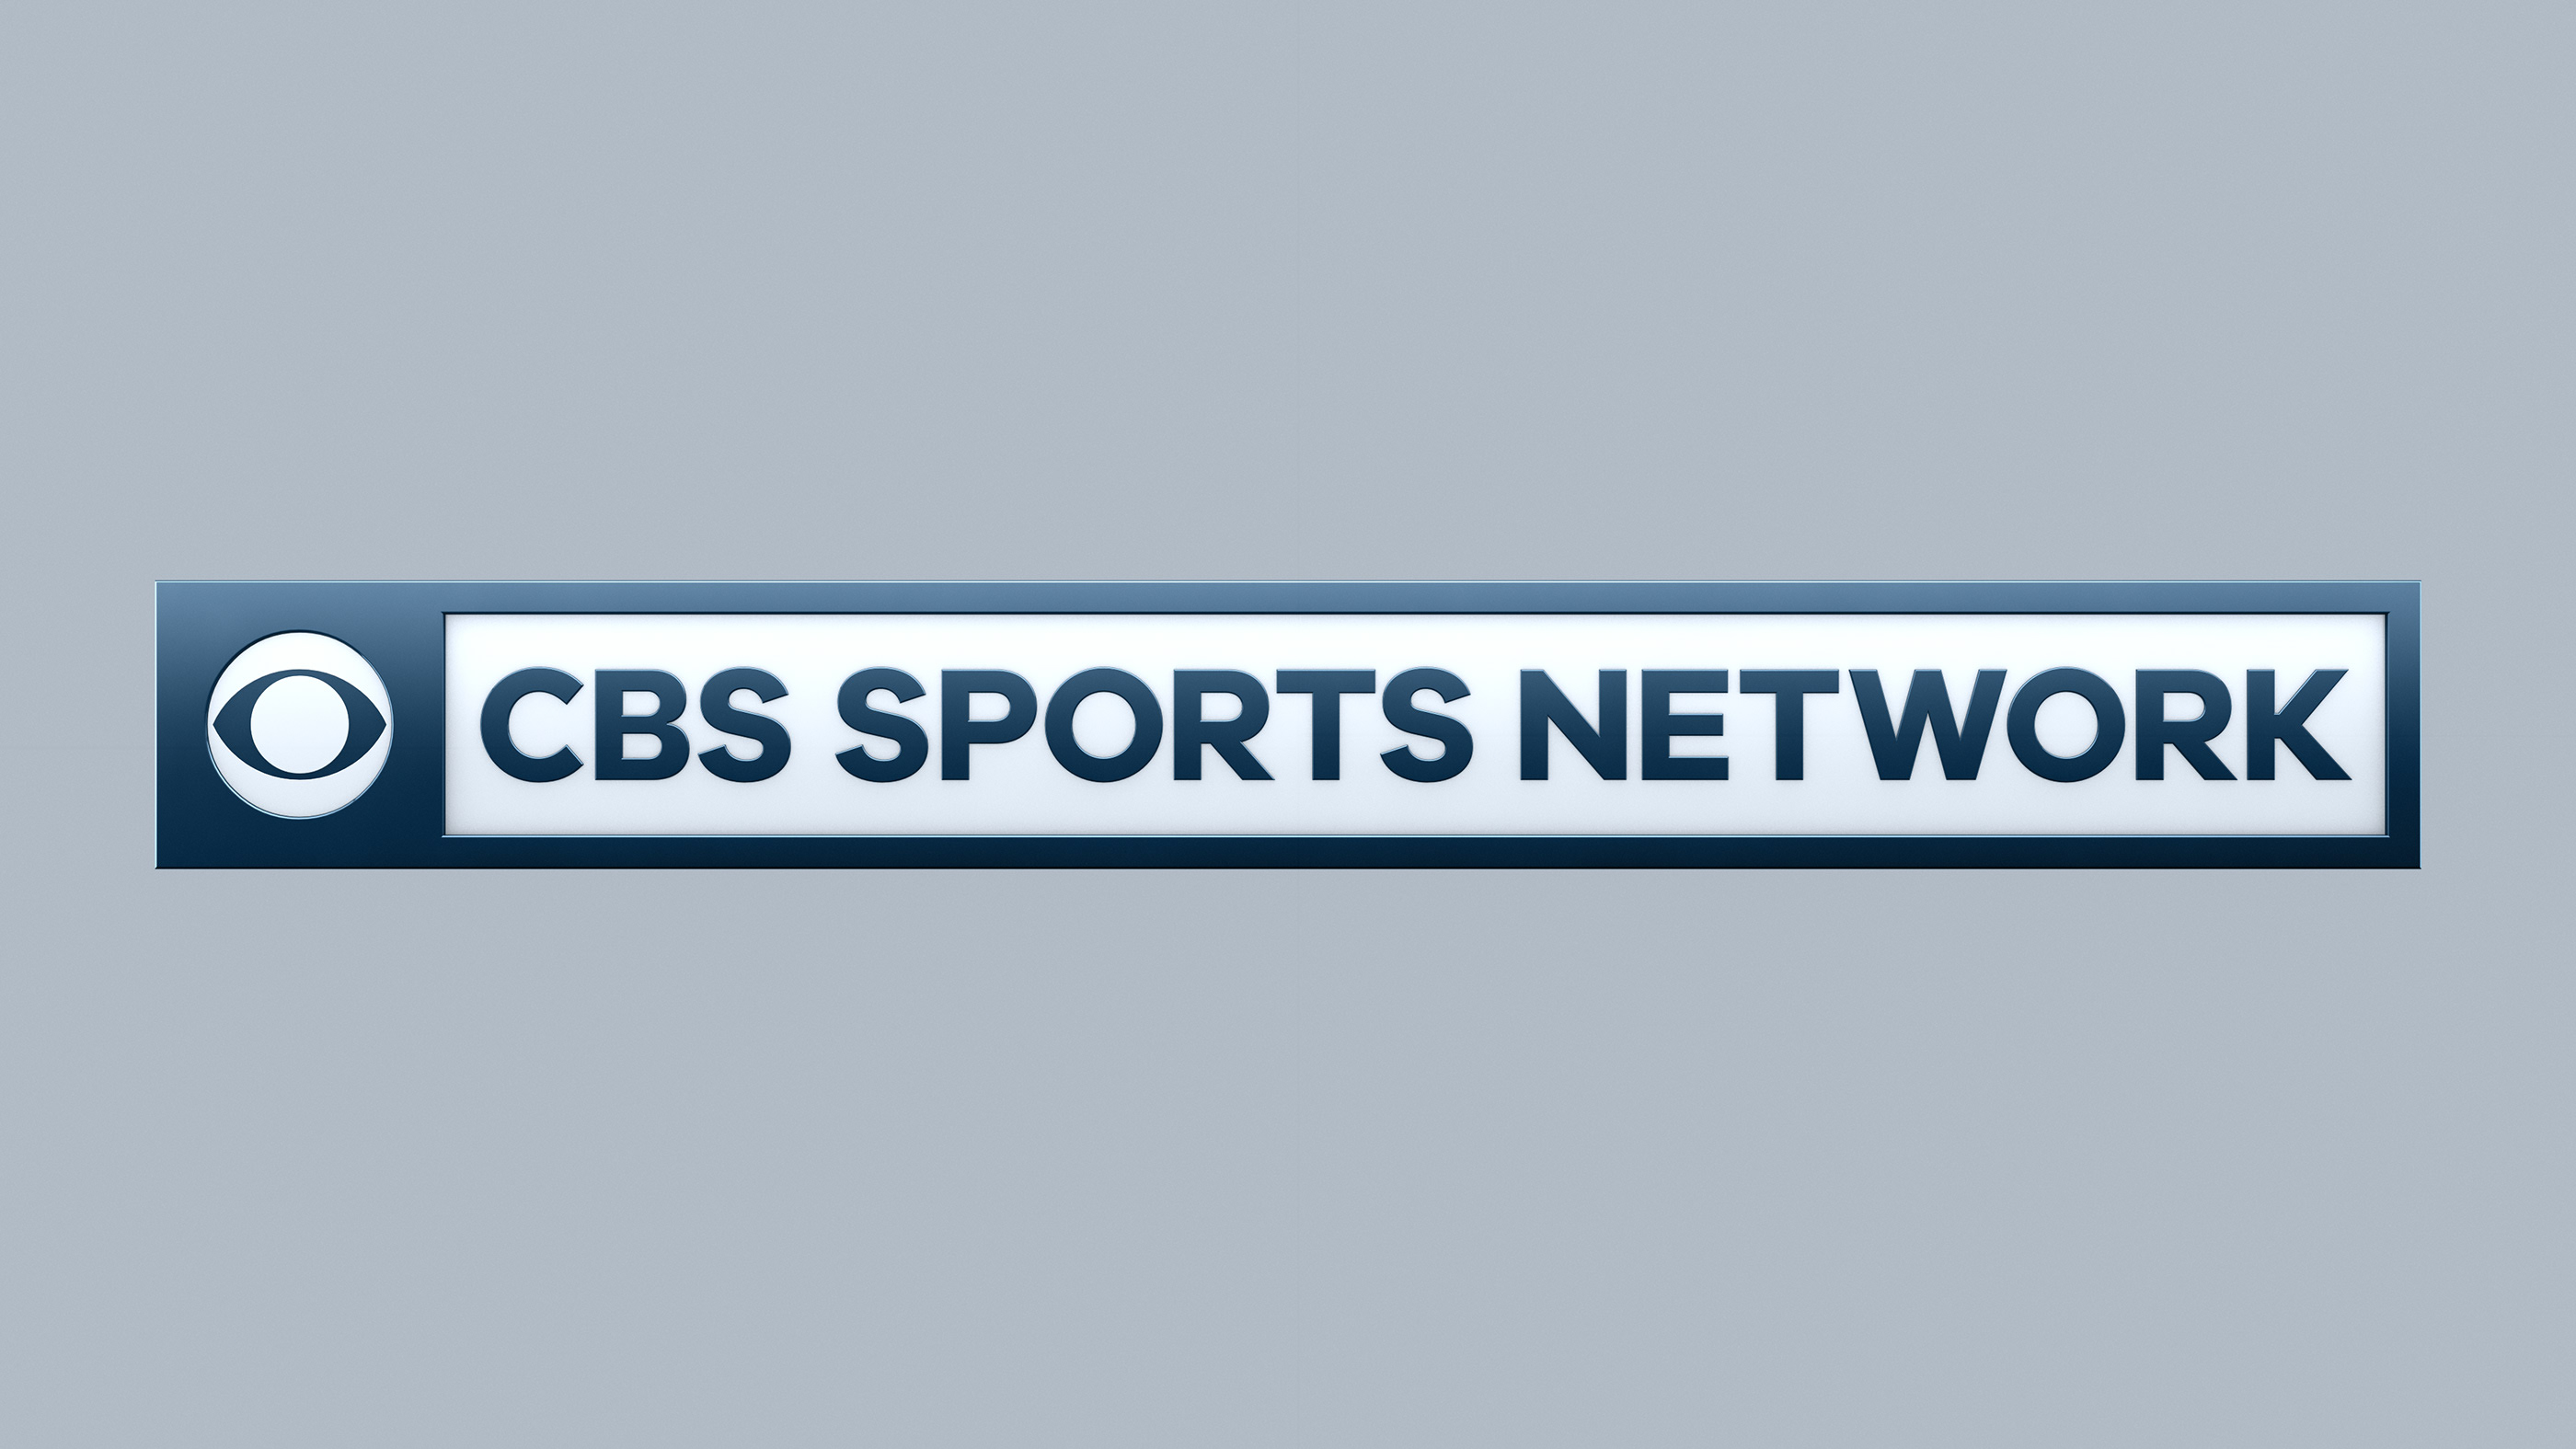 Cbs sports izle. CBC Sport logo. CBC Sport Canli. CBS logo animation. Nick on CBS logo.